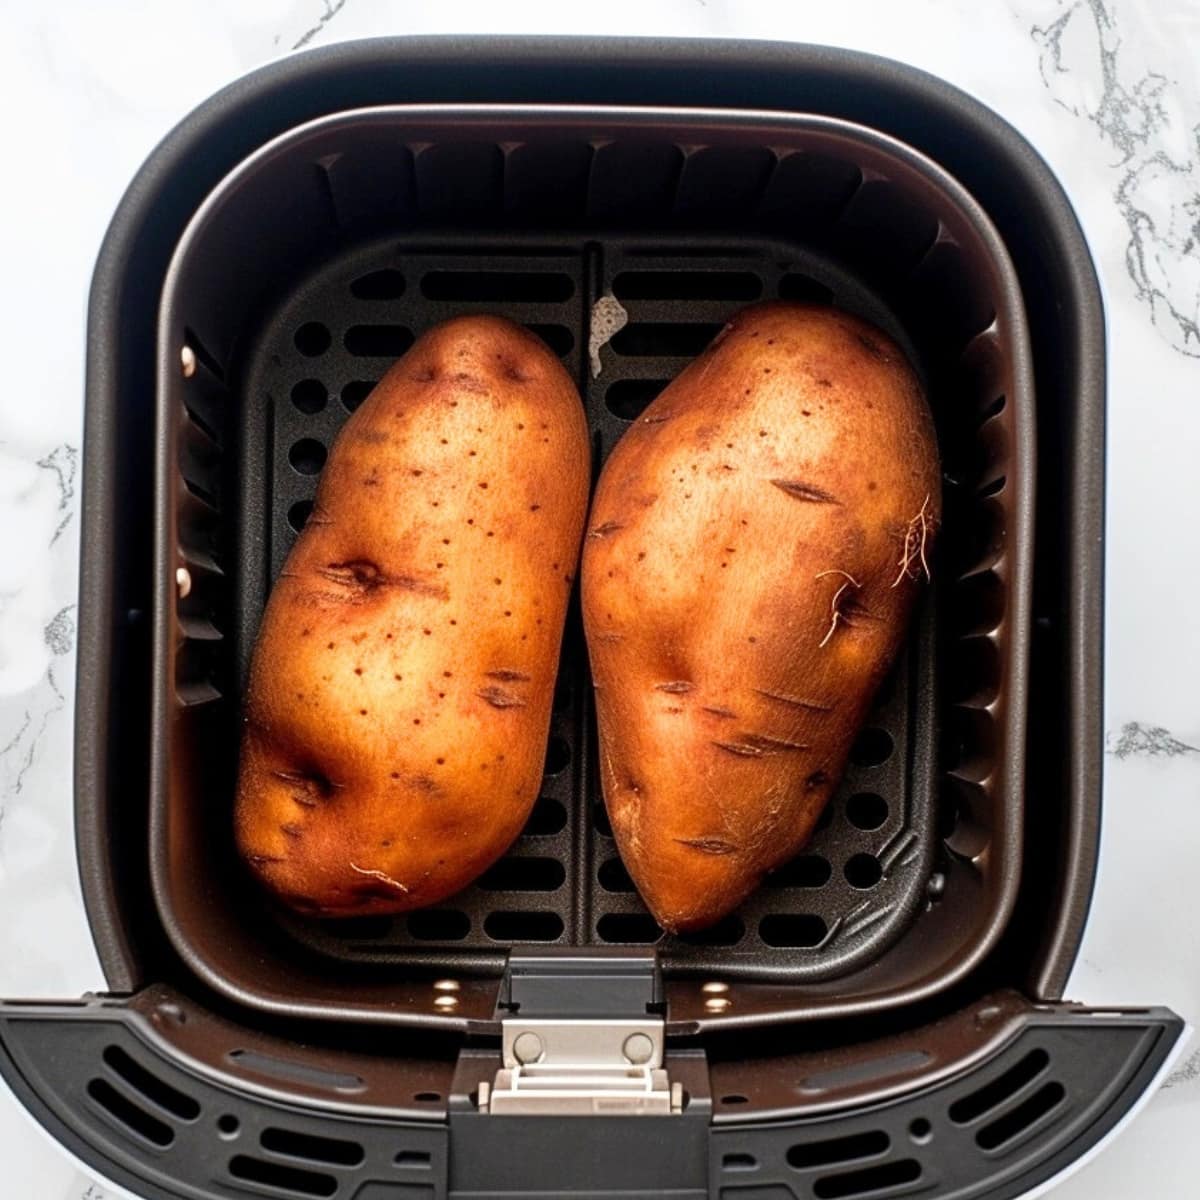 Raw sweet potatoes in air fryer basket